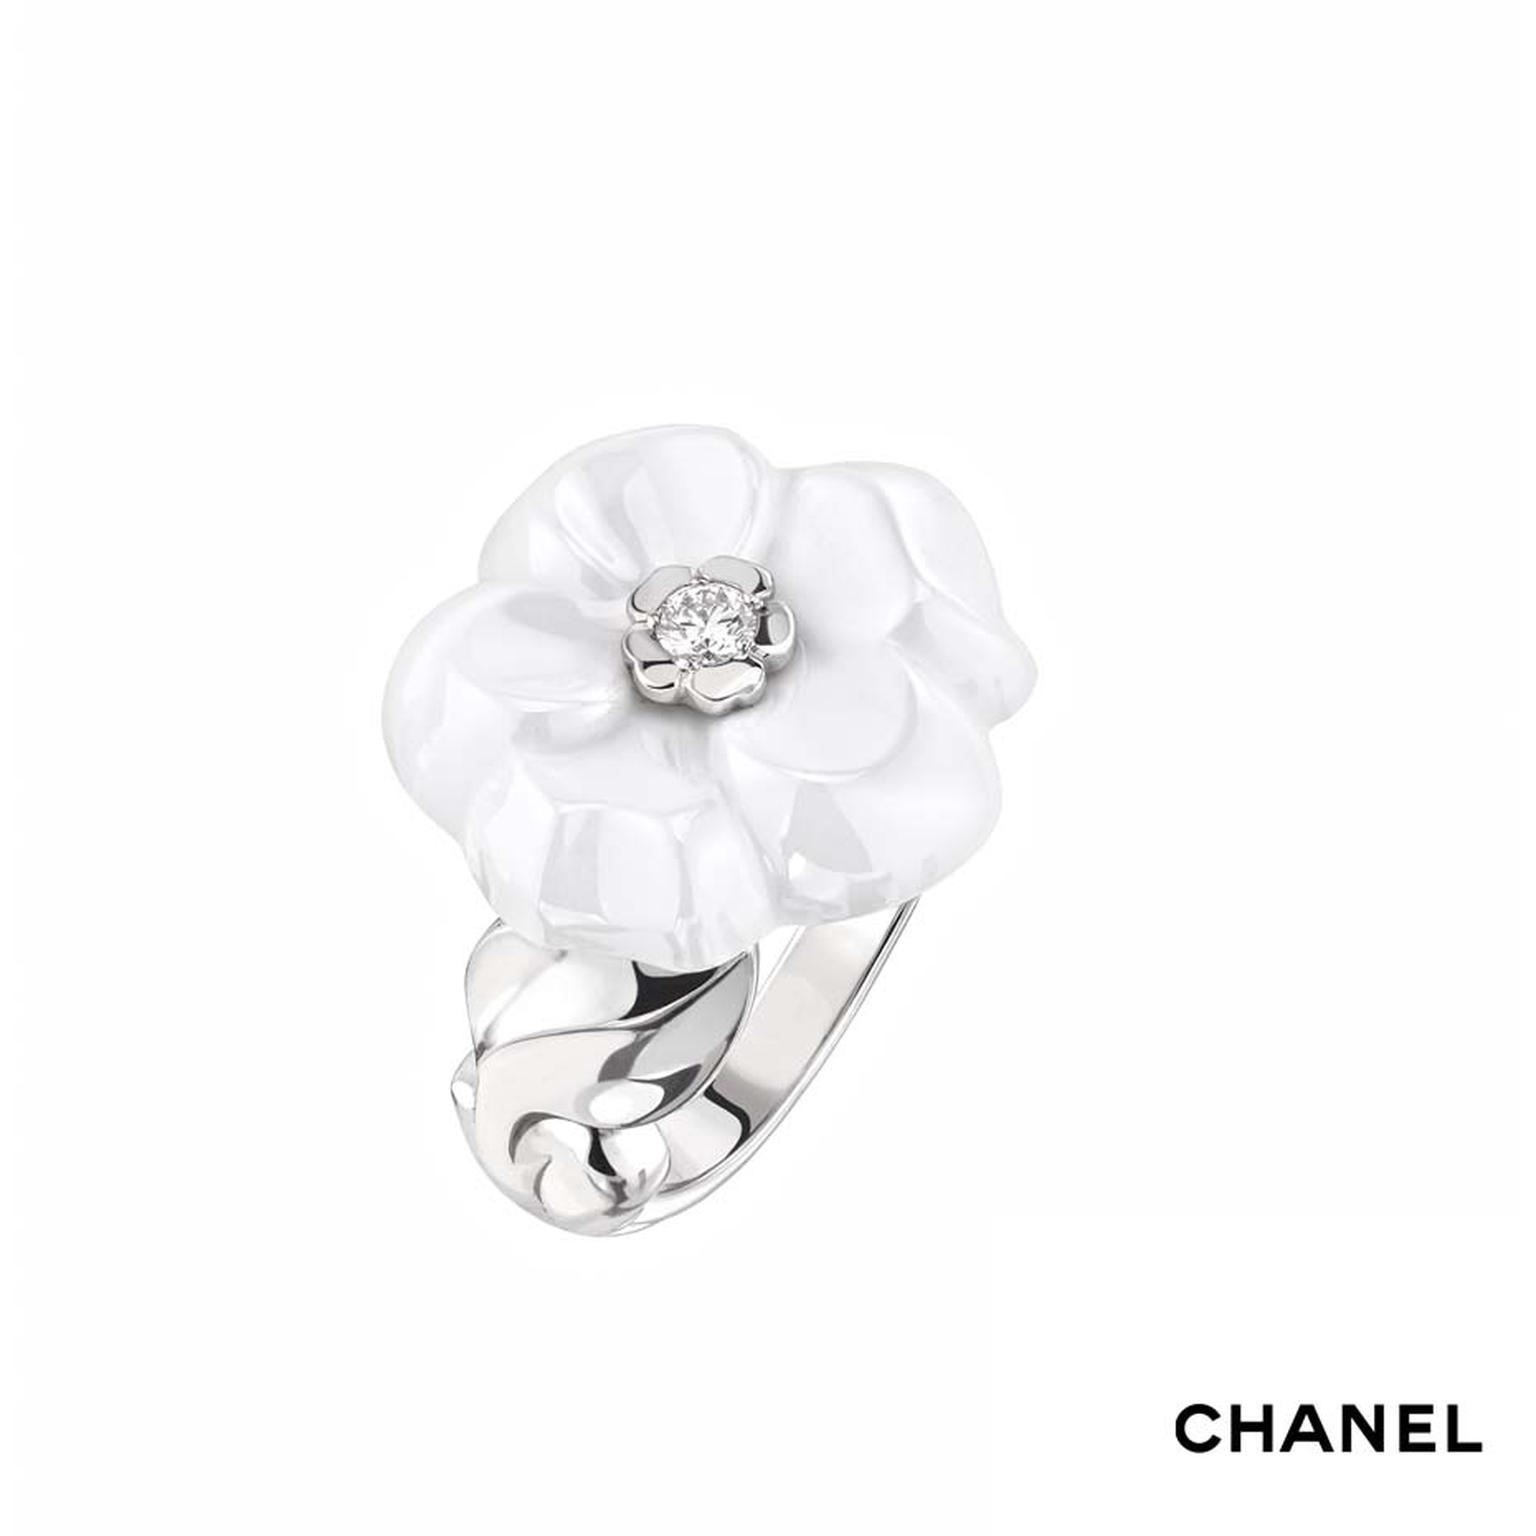 Chanel Camélia Galbé small white ceramic ring with a central brilliant-cut diamond